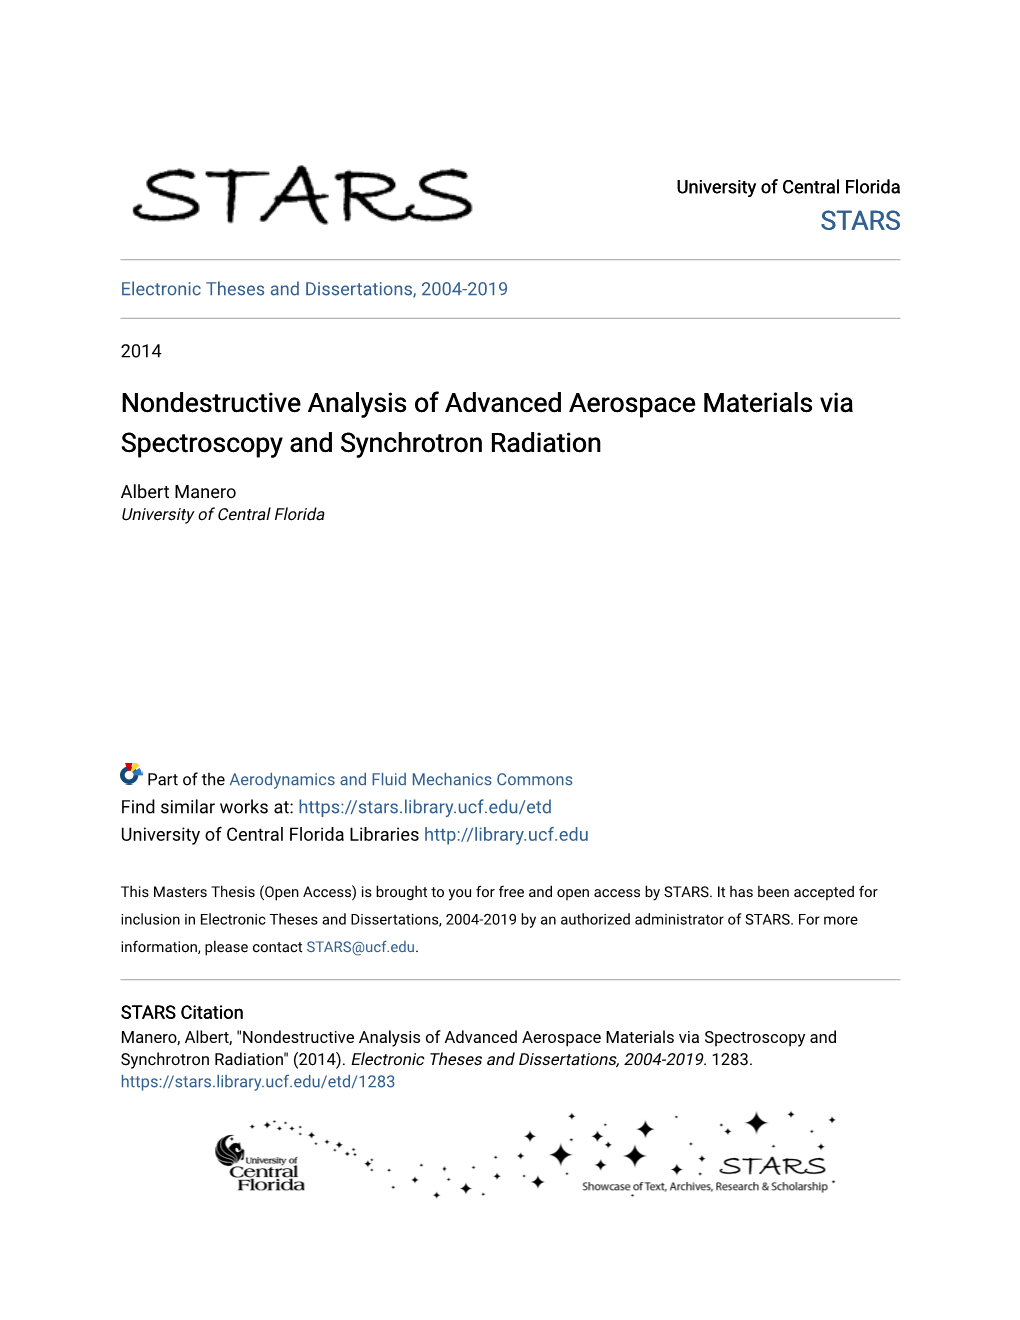 Nondestructive Analysis of Advanced Aerospace Materials Via Spectroscopy and Synchrotron Radiation